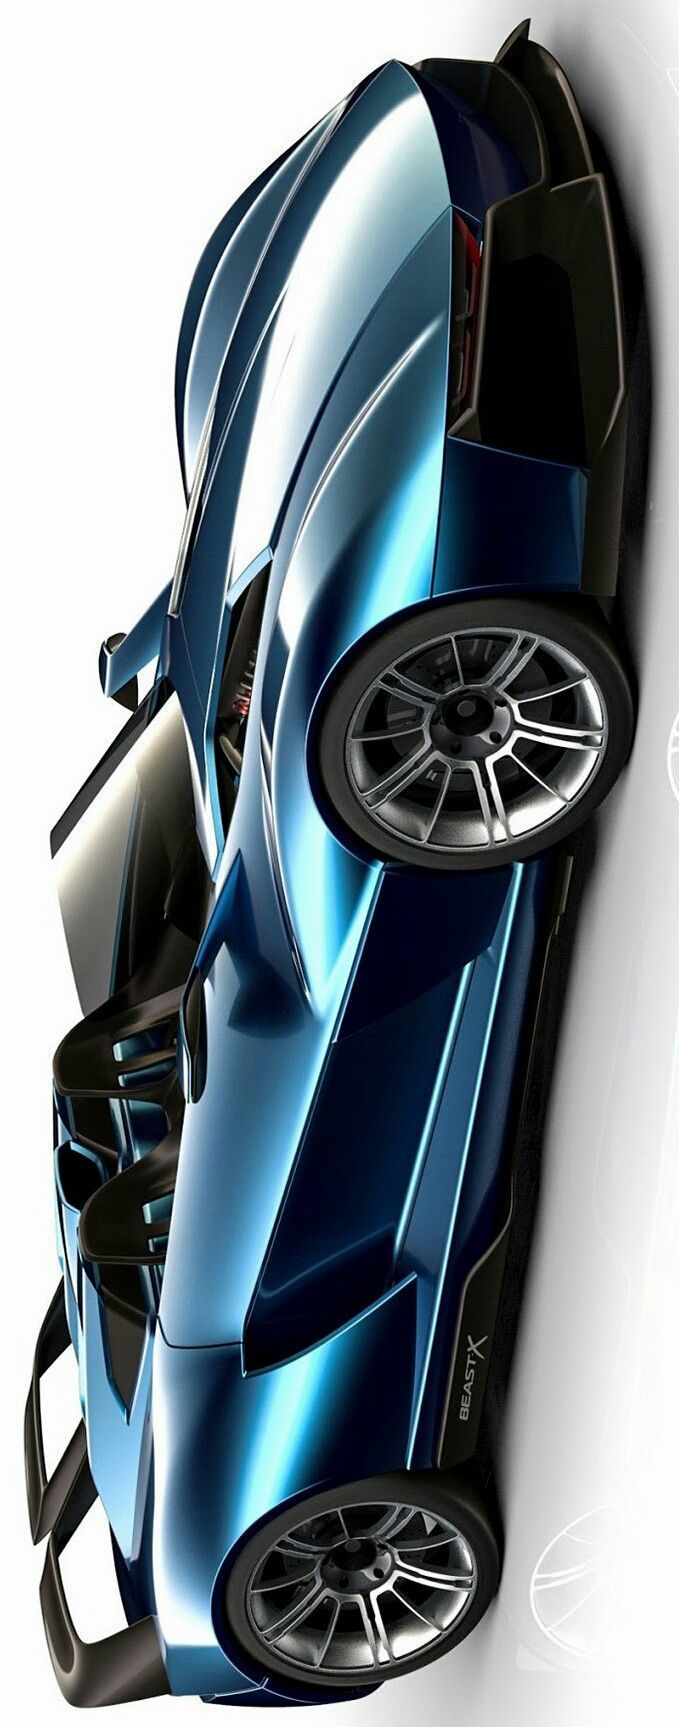 2016 Rezvani Beast X by Levon #hypercar #supercars